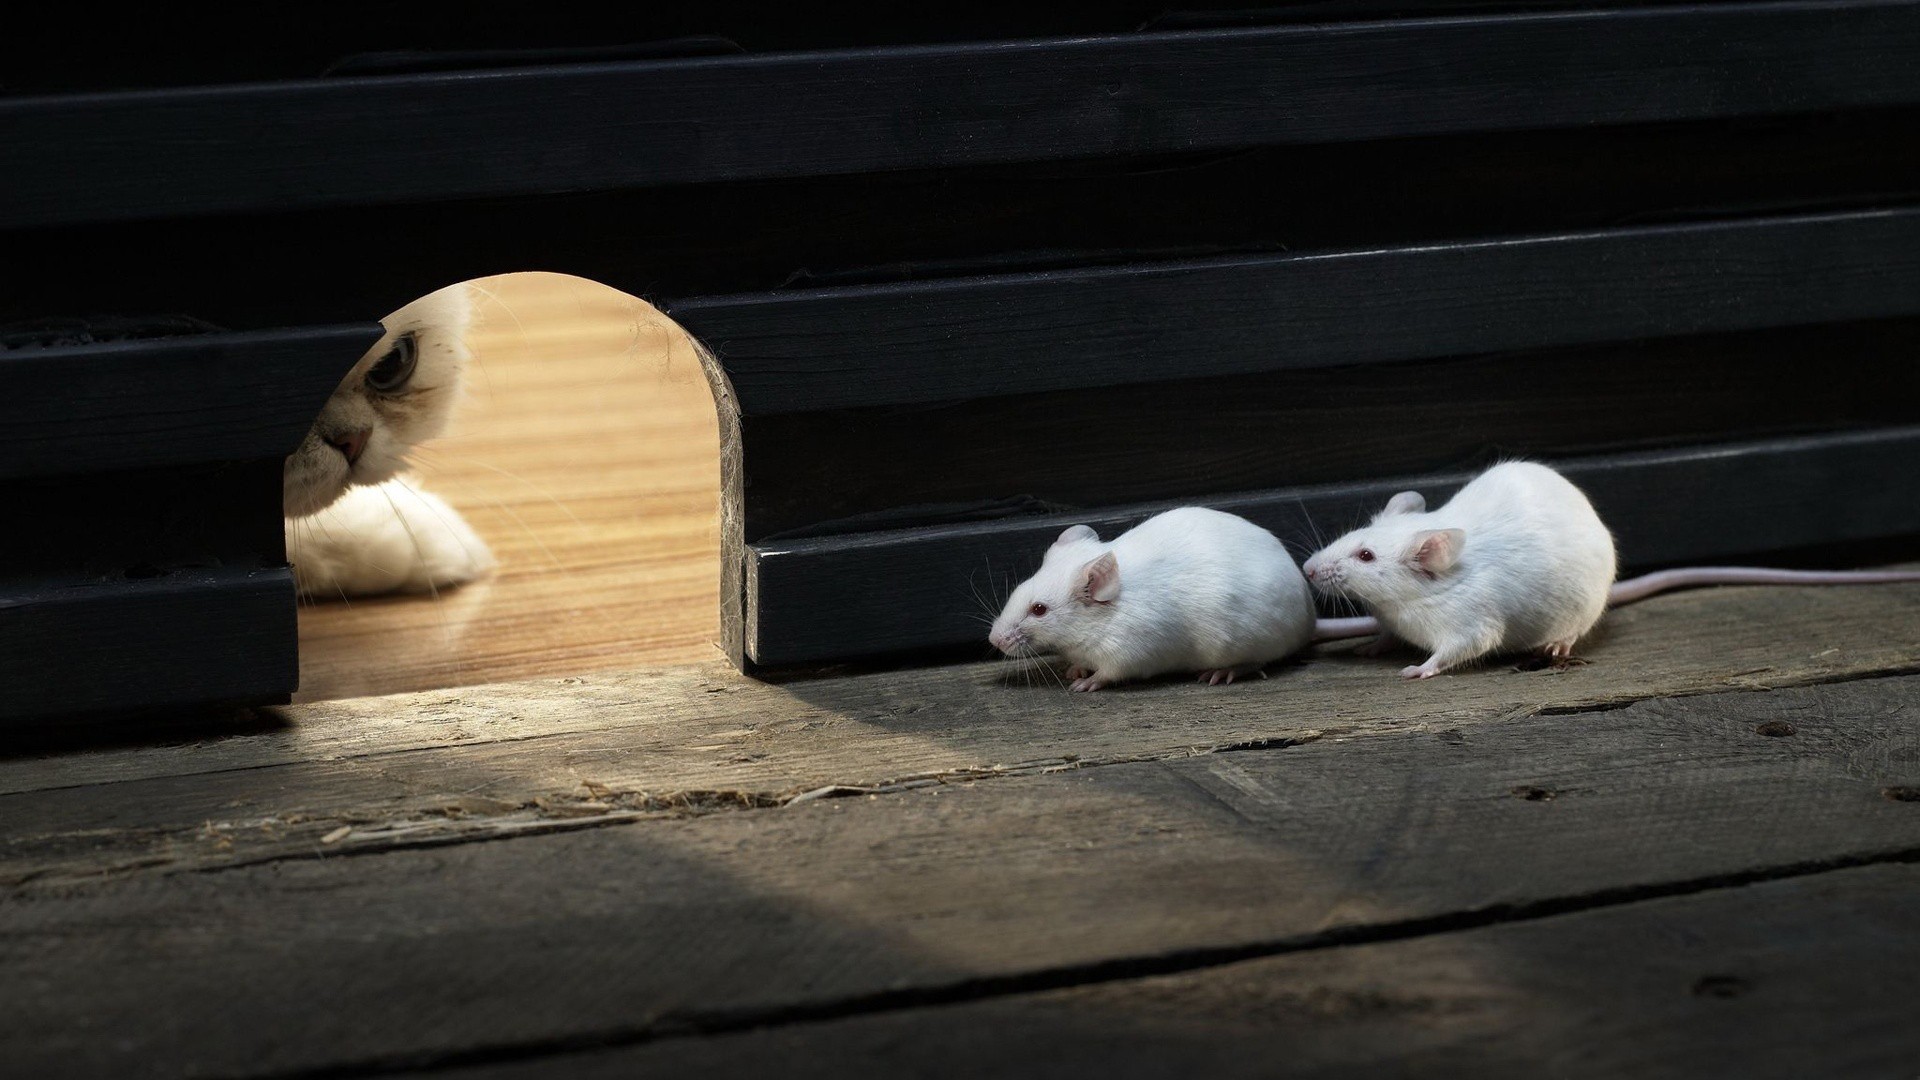 General 1920x1080 animals cats waiting wood wooden surface pet lights shadow rats macro hunting white mice mammals